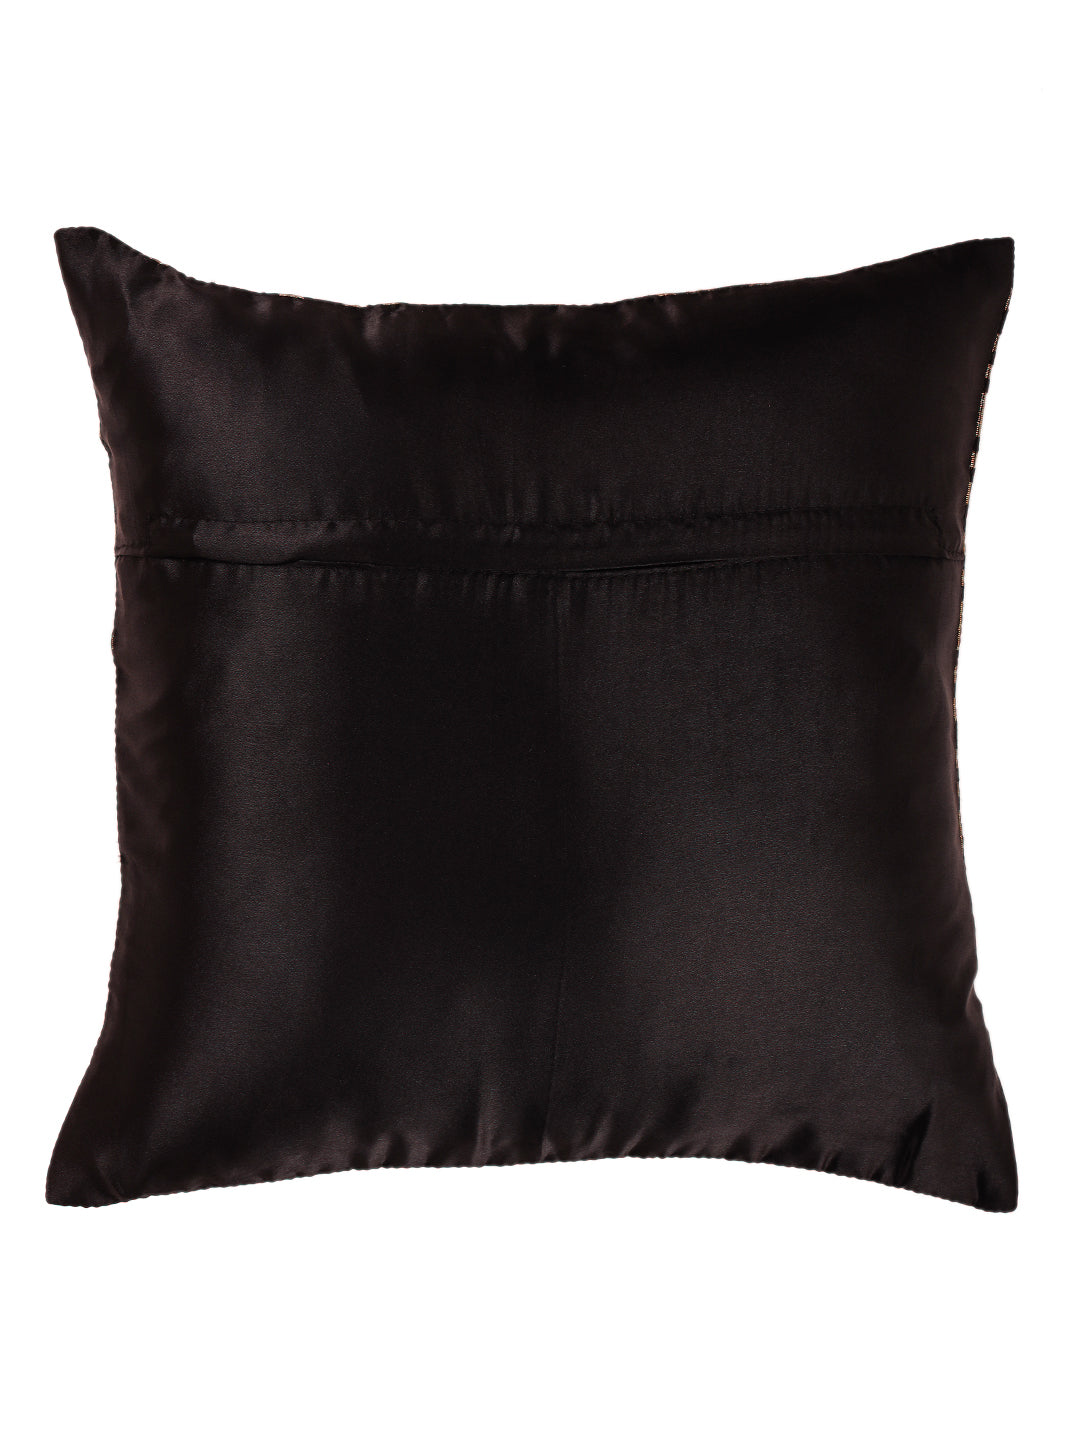 Silkfab Set 0f 5 Decorative Silk Cushion Covers (16x16) Penta Black - SILKFAB